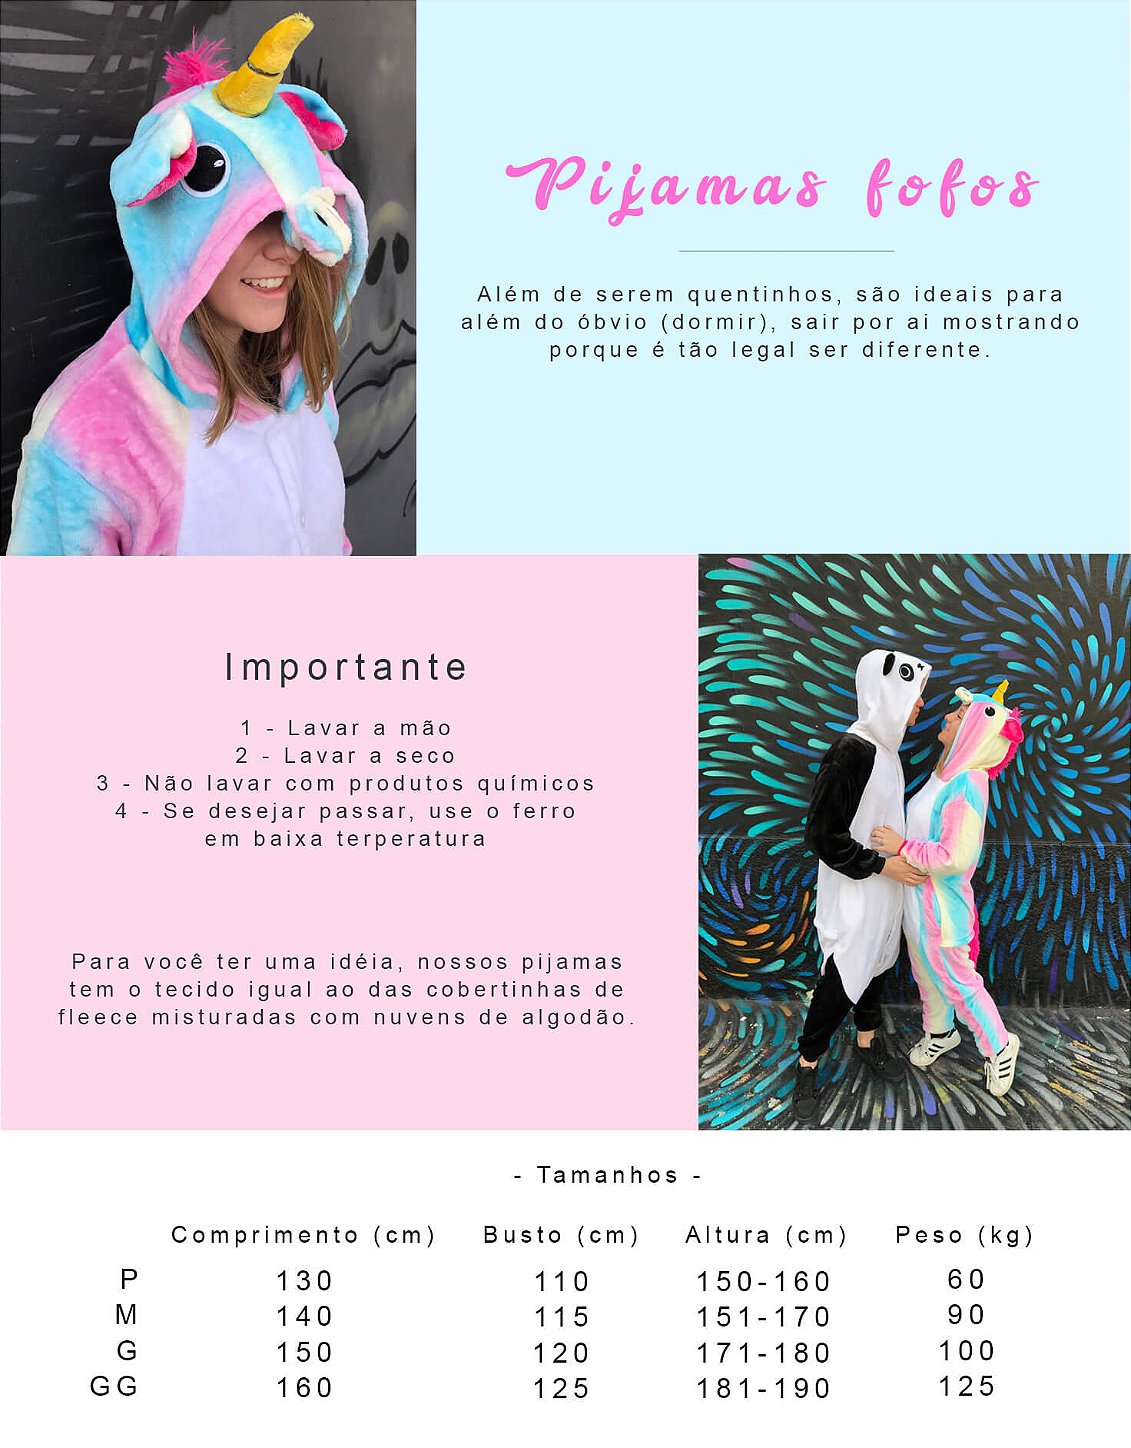 Pijama de coala we stuff